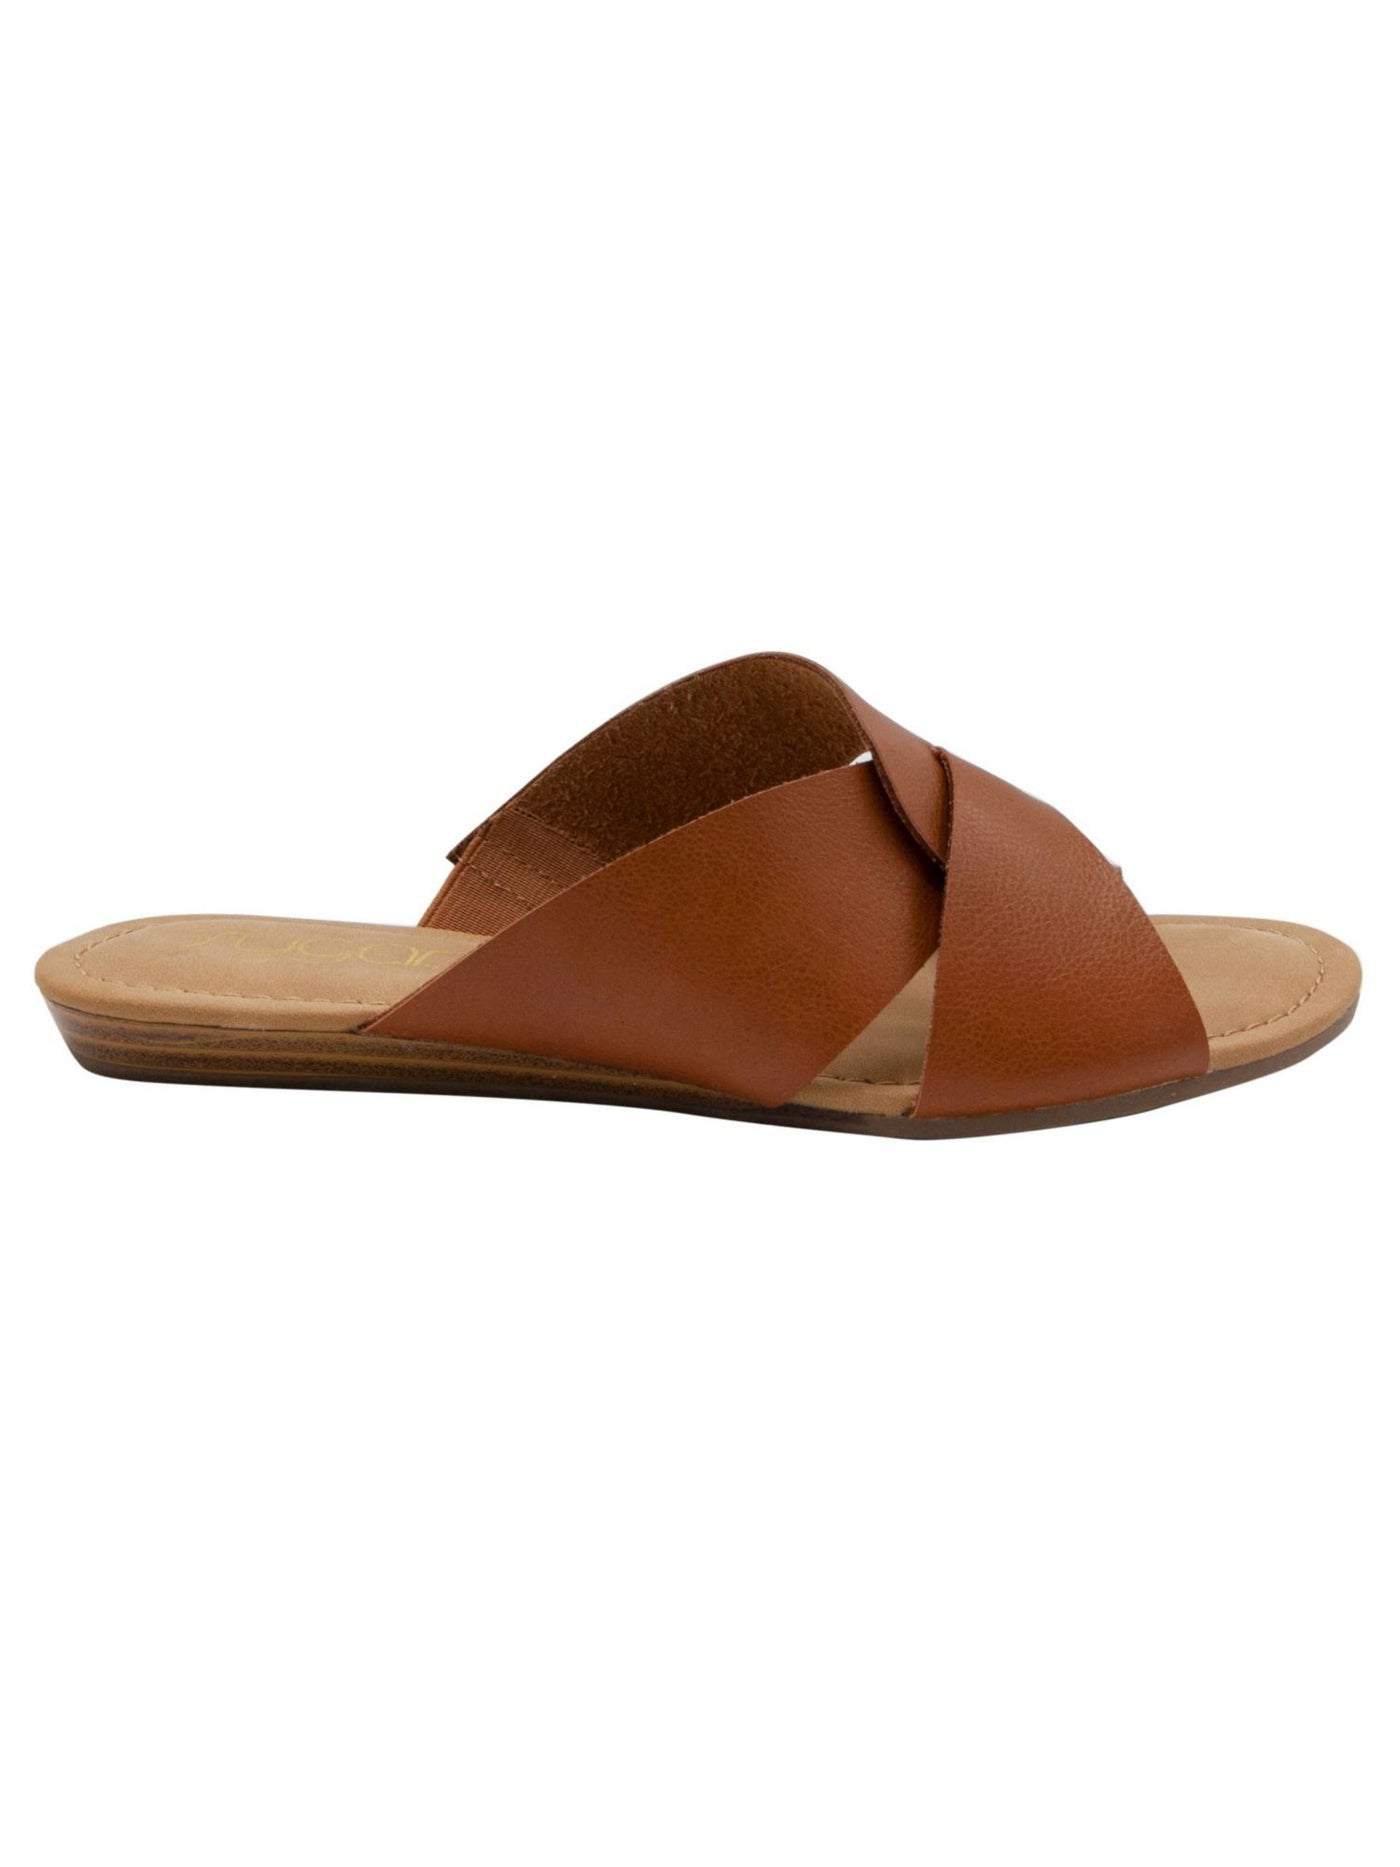 SUGAR Womens Brown Comfort Woven Olena Round Toe Block Heel Slip On Slide Sandals 8.5 M